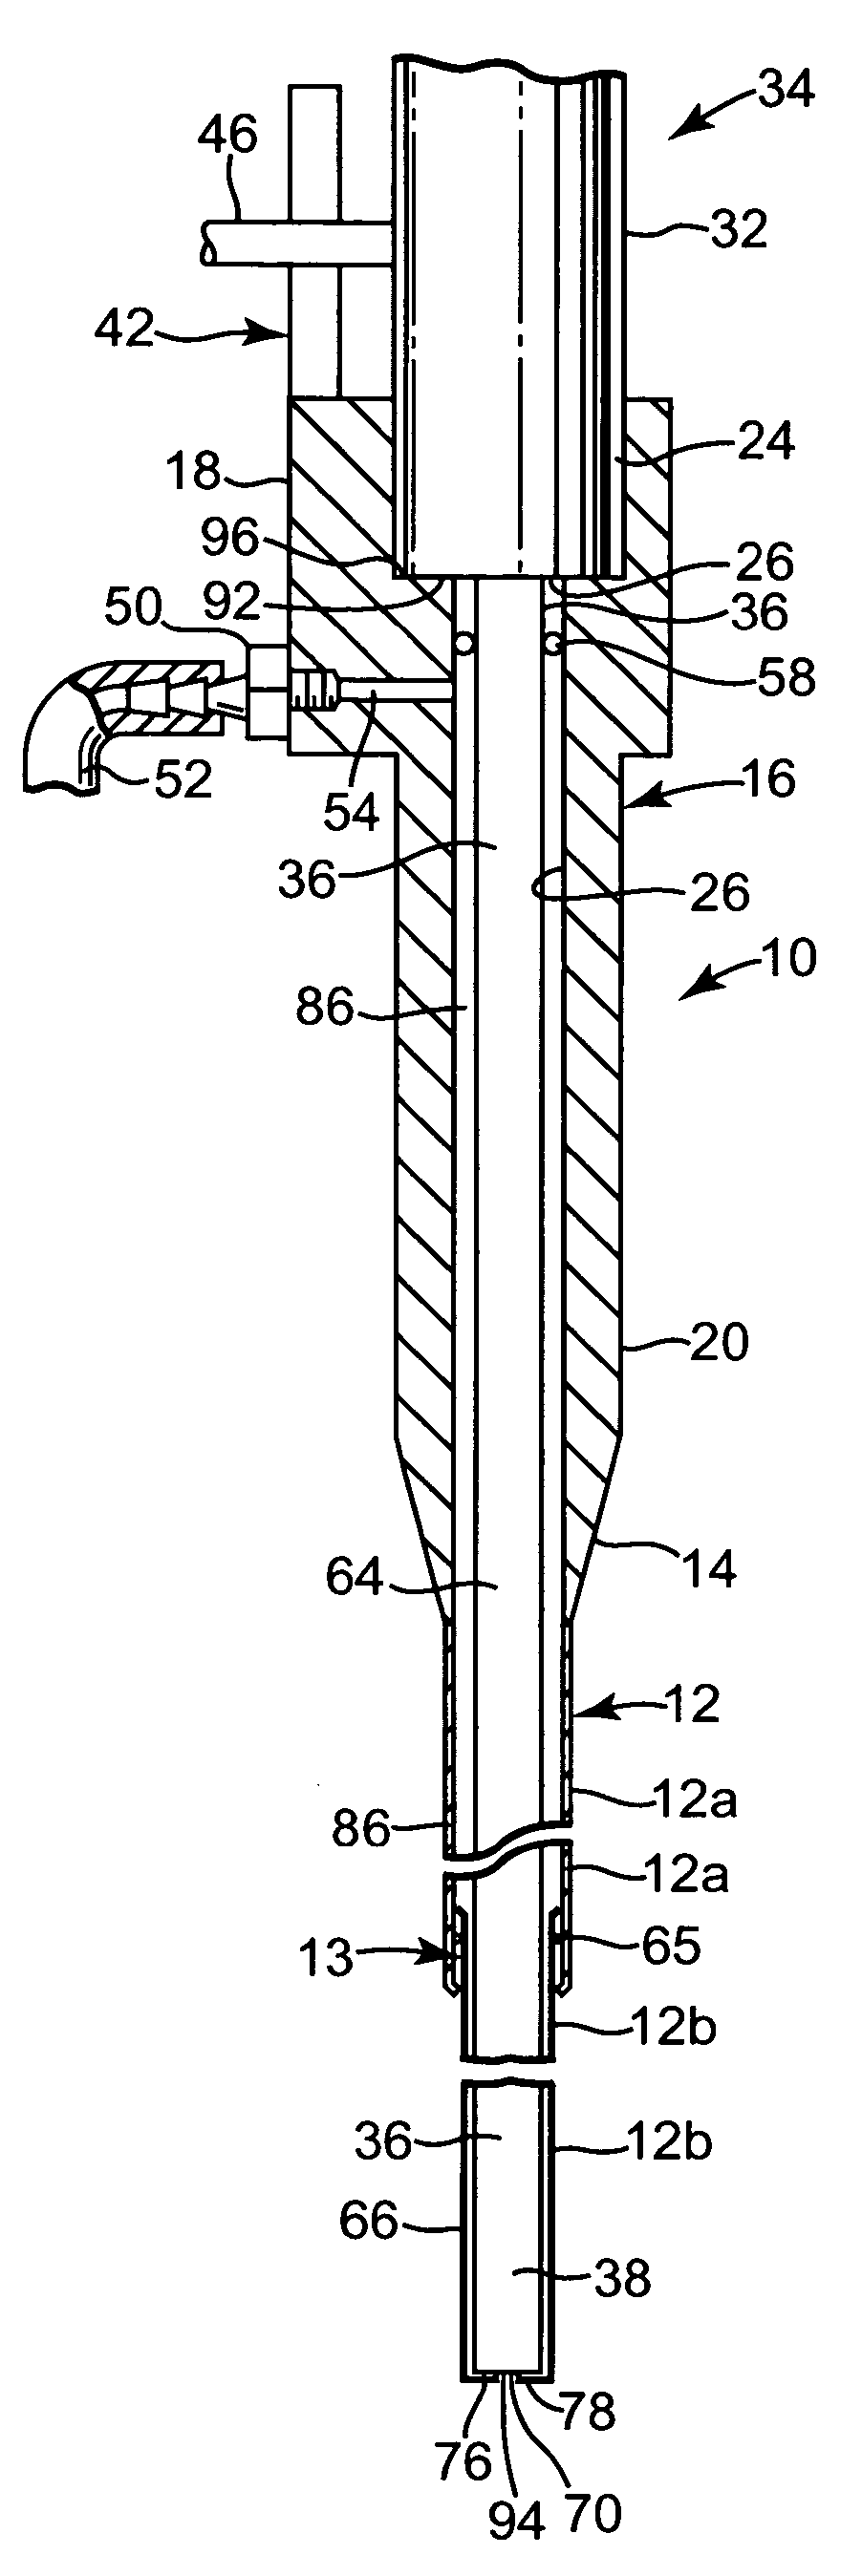 Disposable endoscope sheath having adjustable length